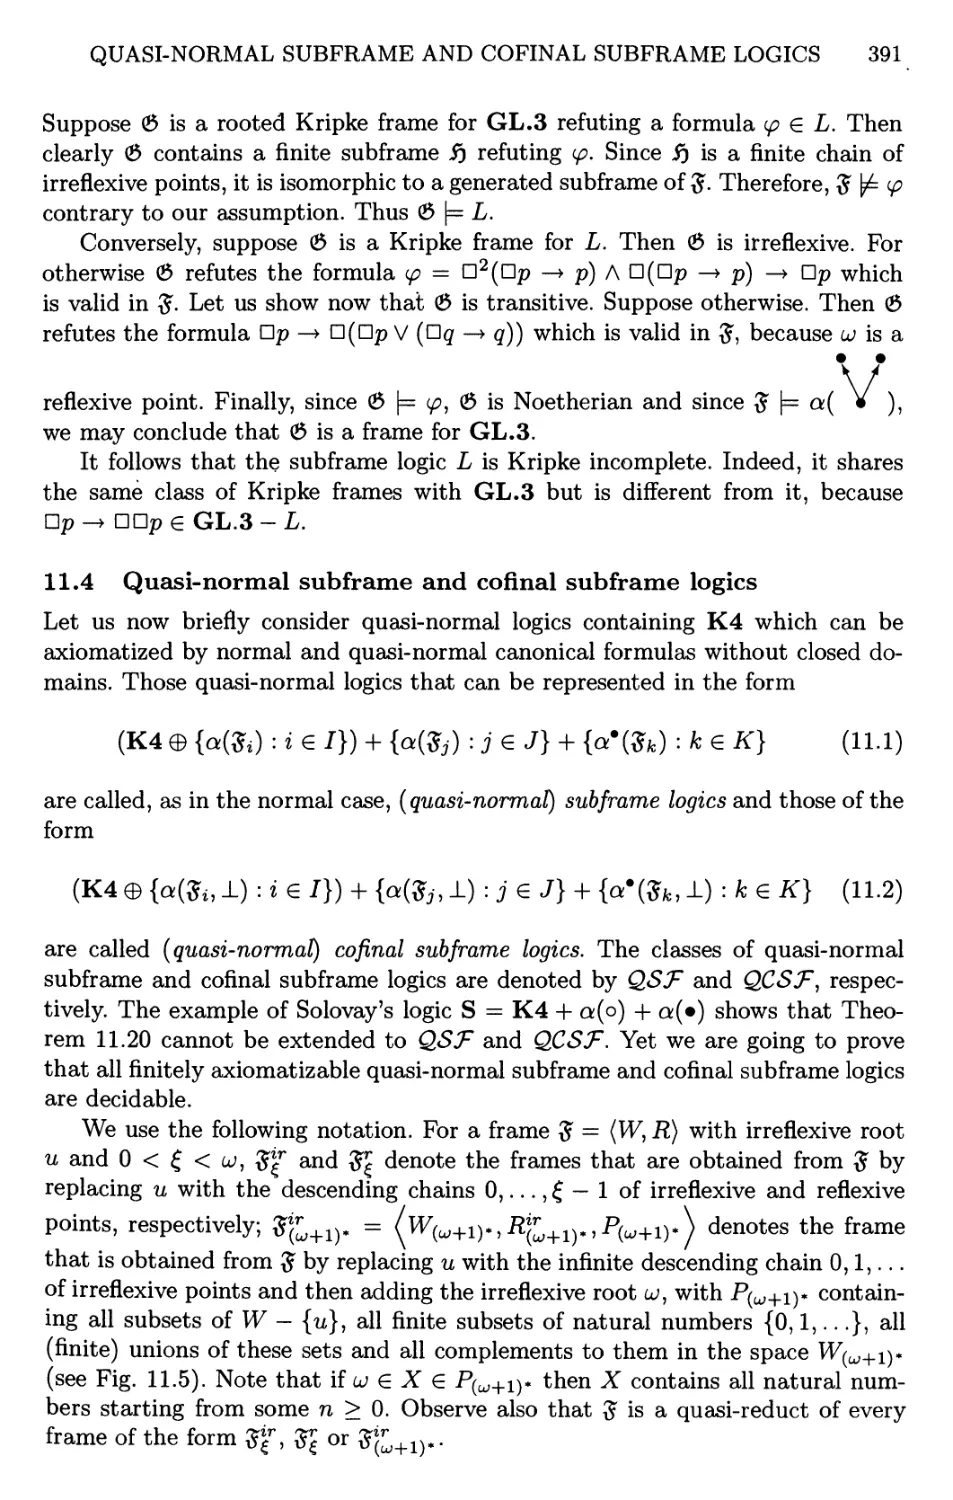 11.4 Quasi-normal subframe and cofinal subframe logics